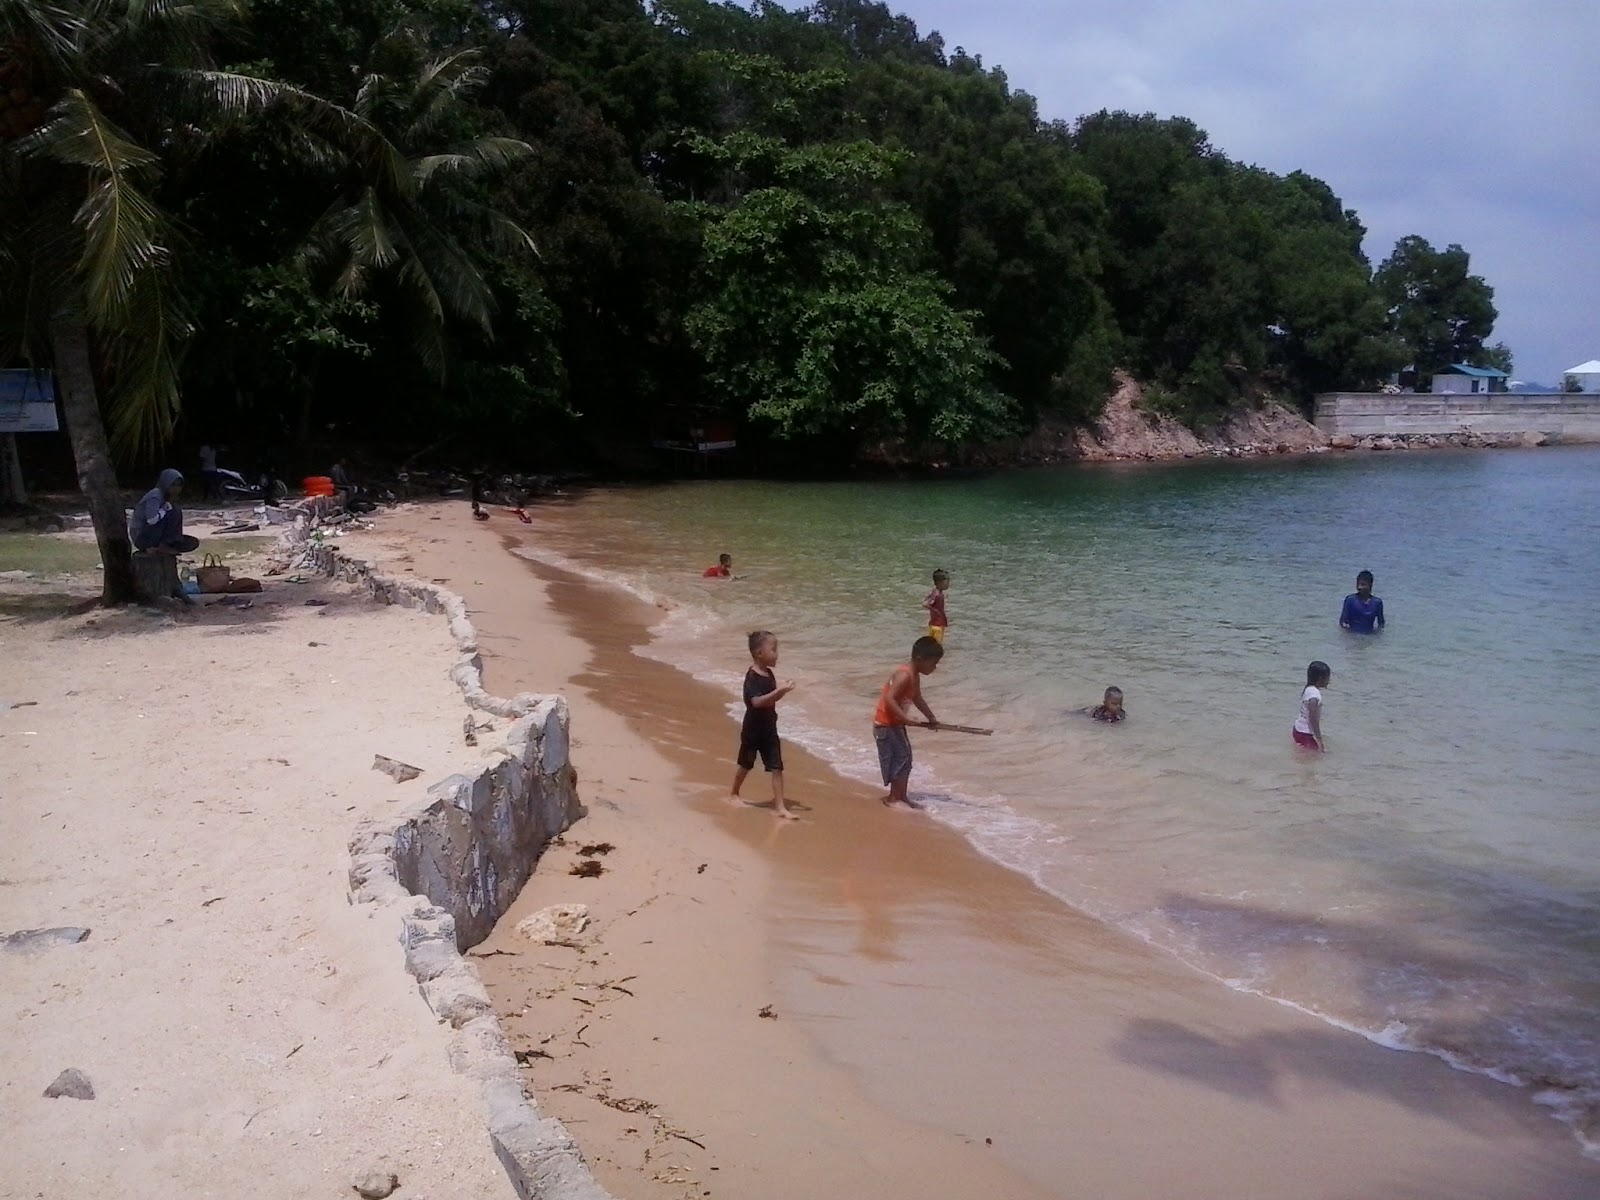 Pantai Tanjung Pinggir'in fotoğrafı geniş plaj ile birlikte